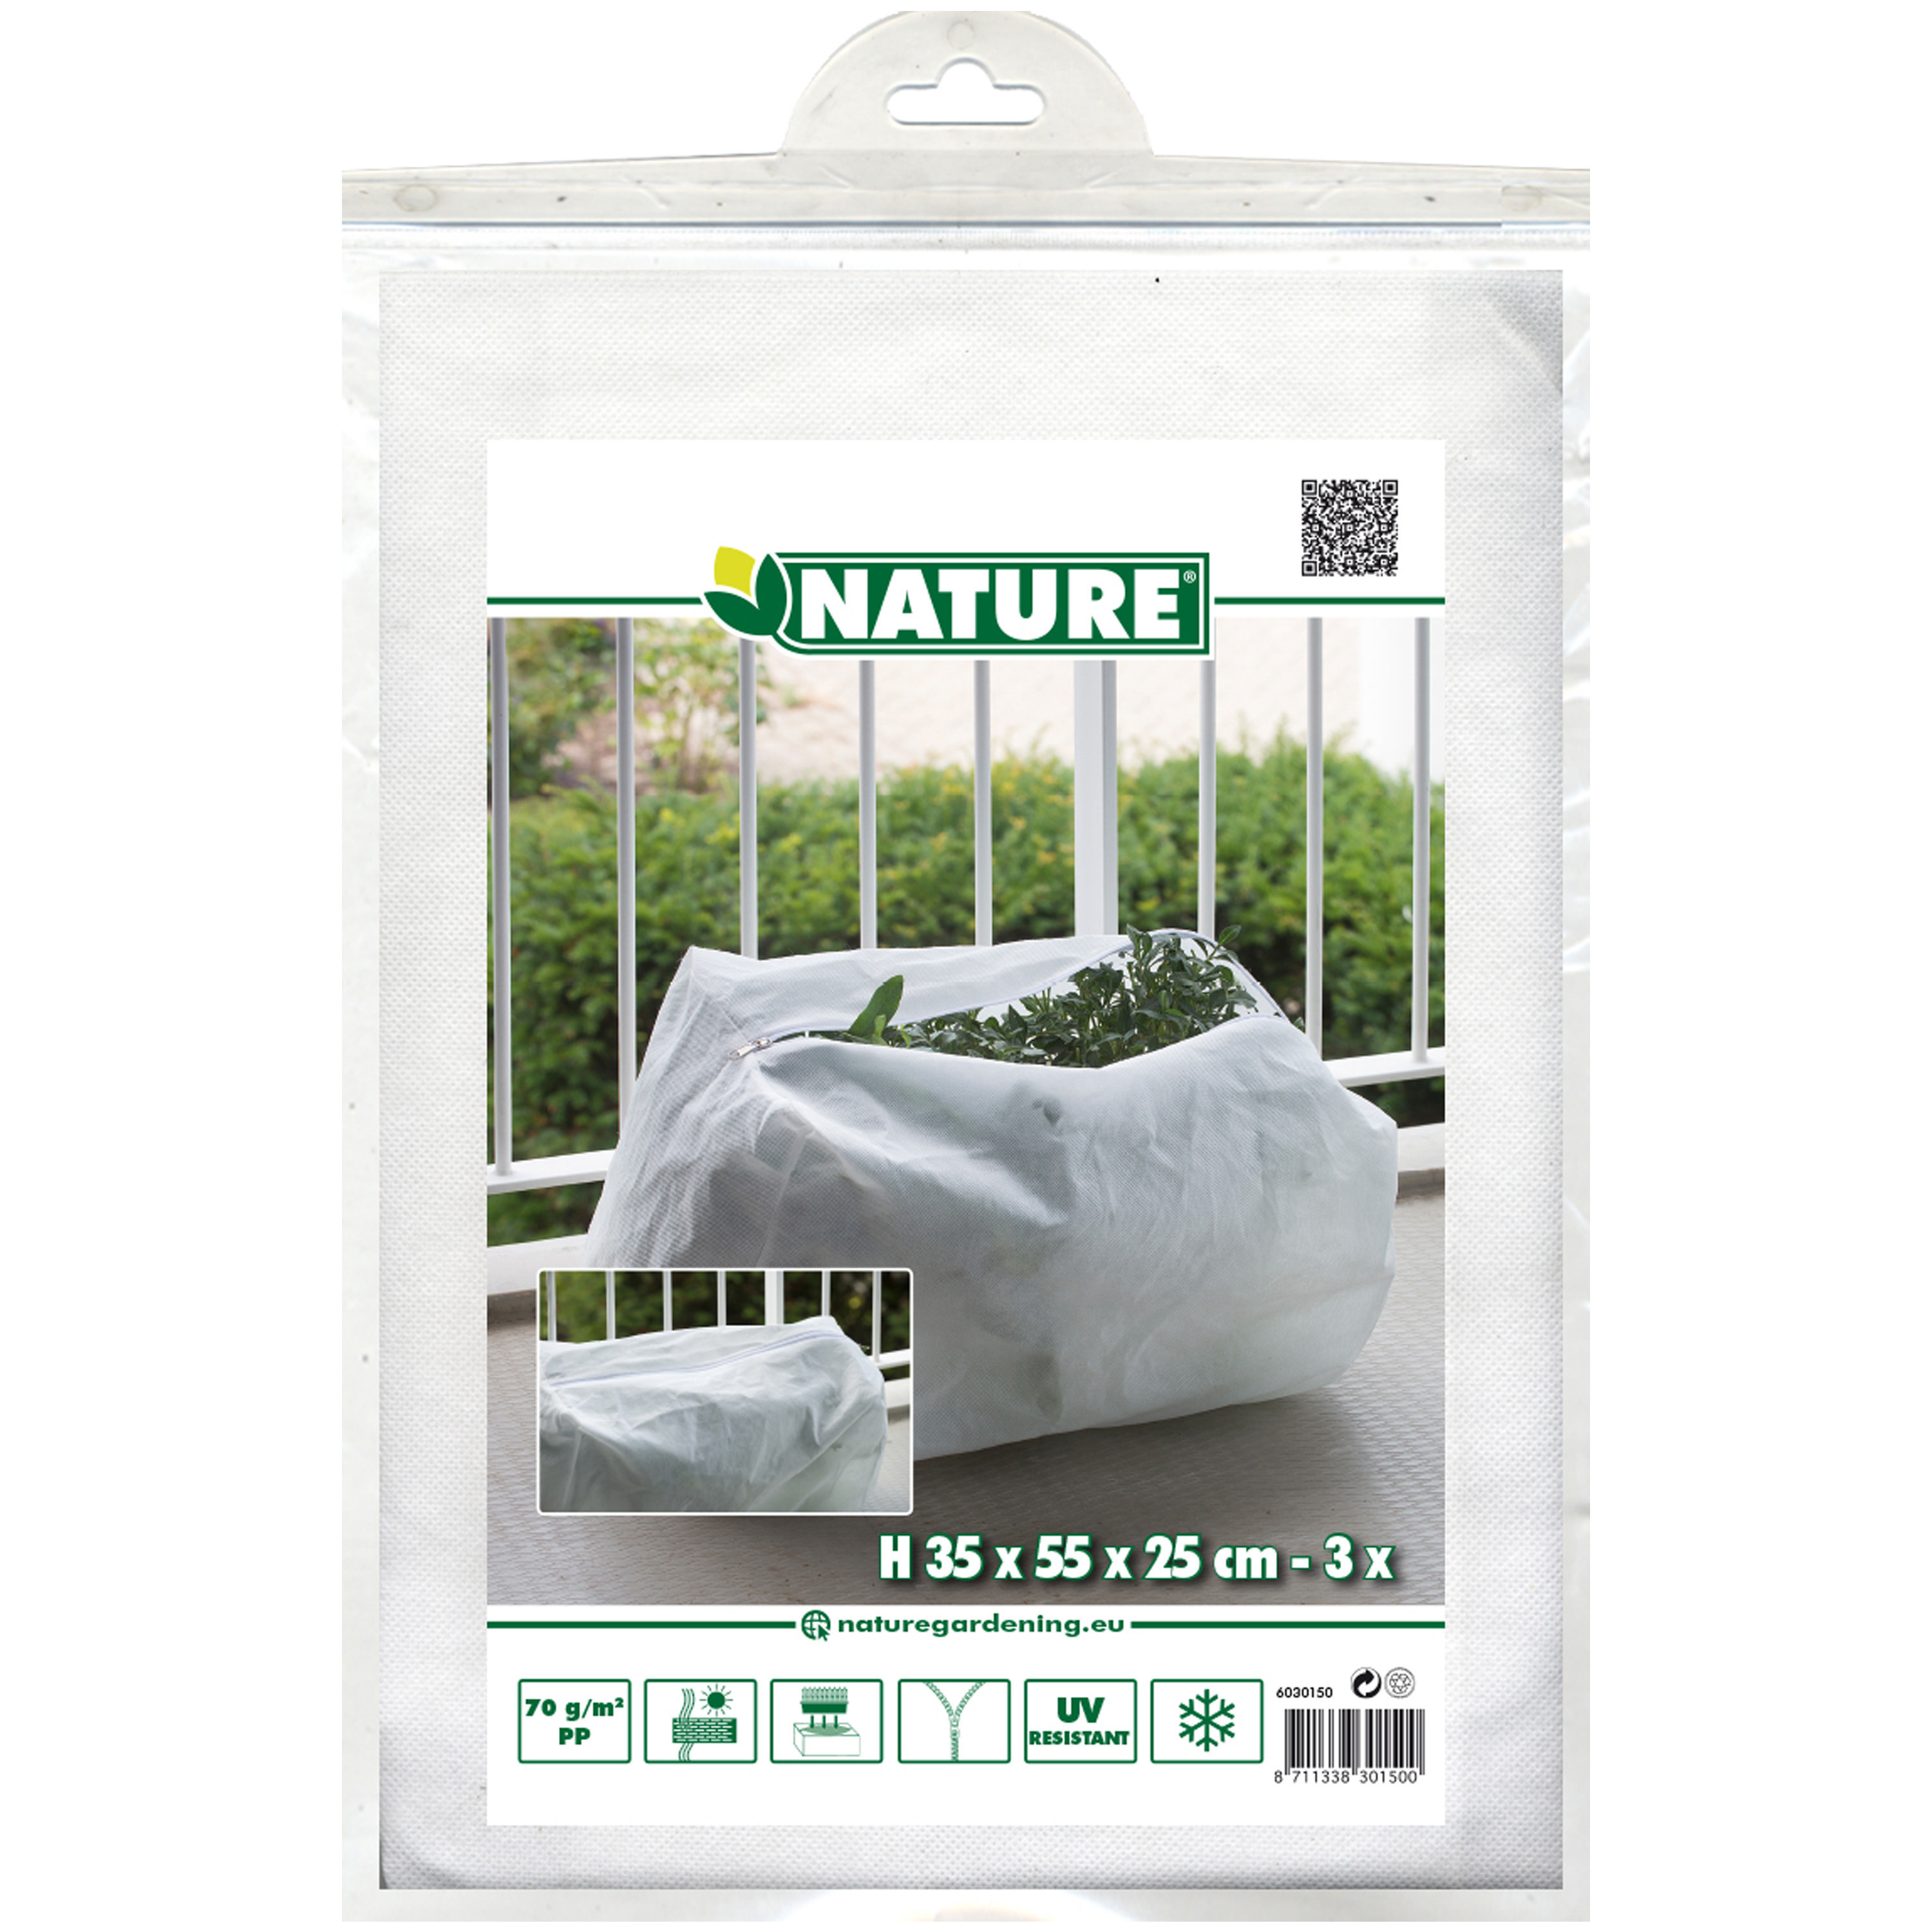 Nature plantenhoes 3x stuks balkonbak 35 x 55 x 25 wit anti-vorst planten beschermhoes